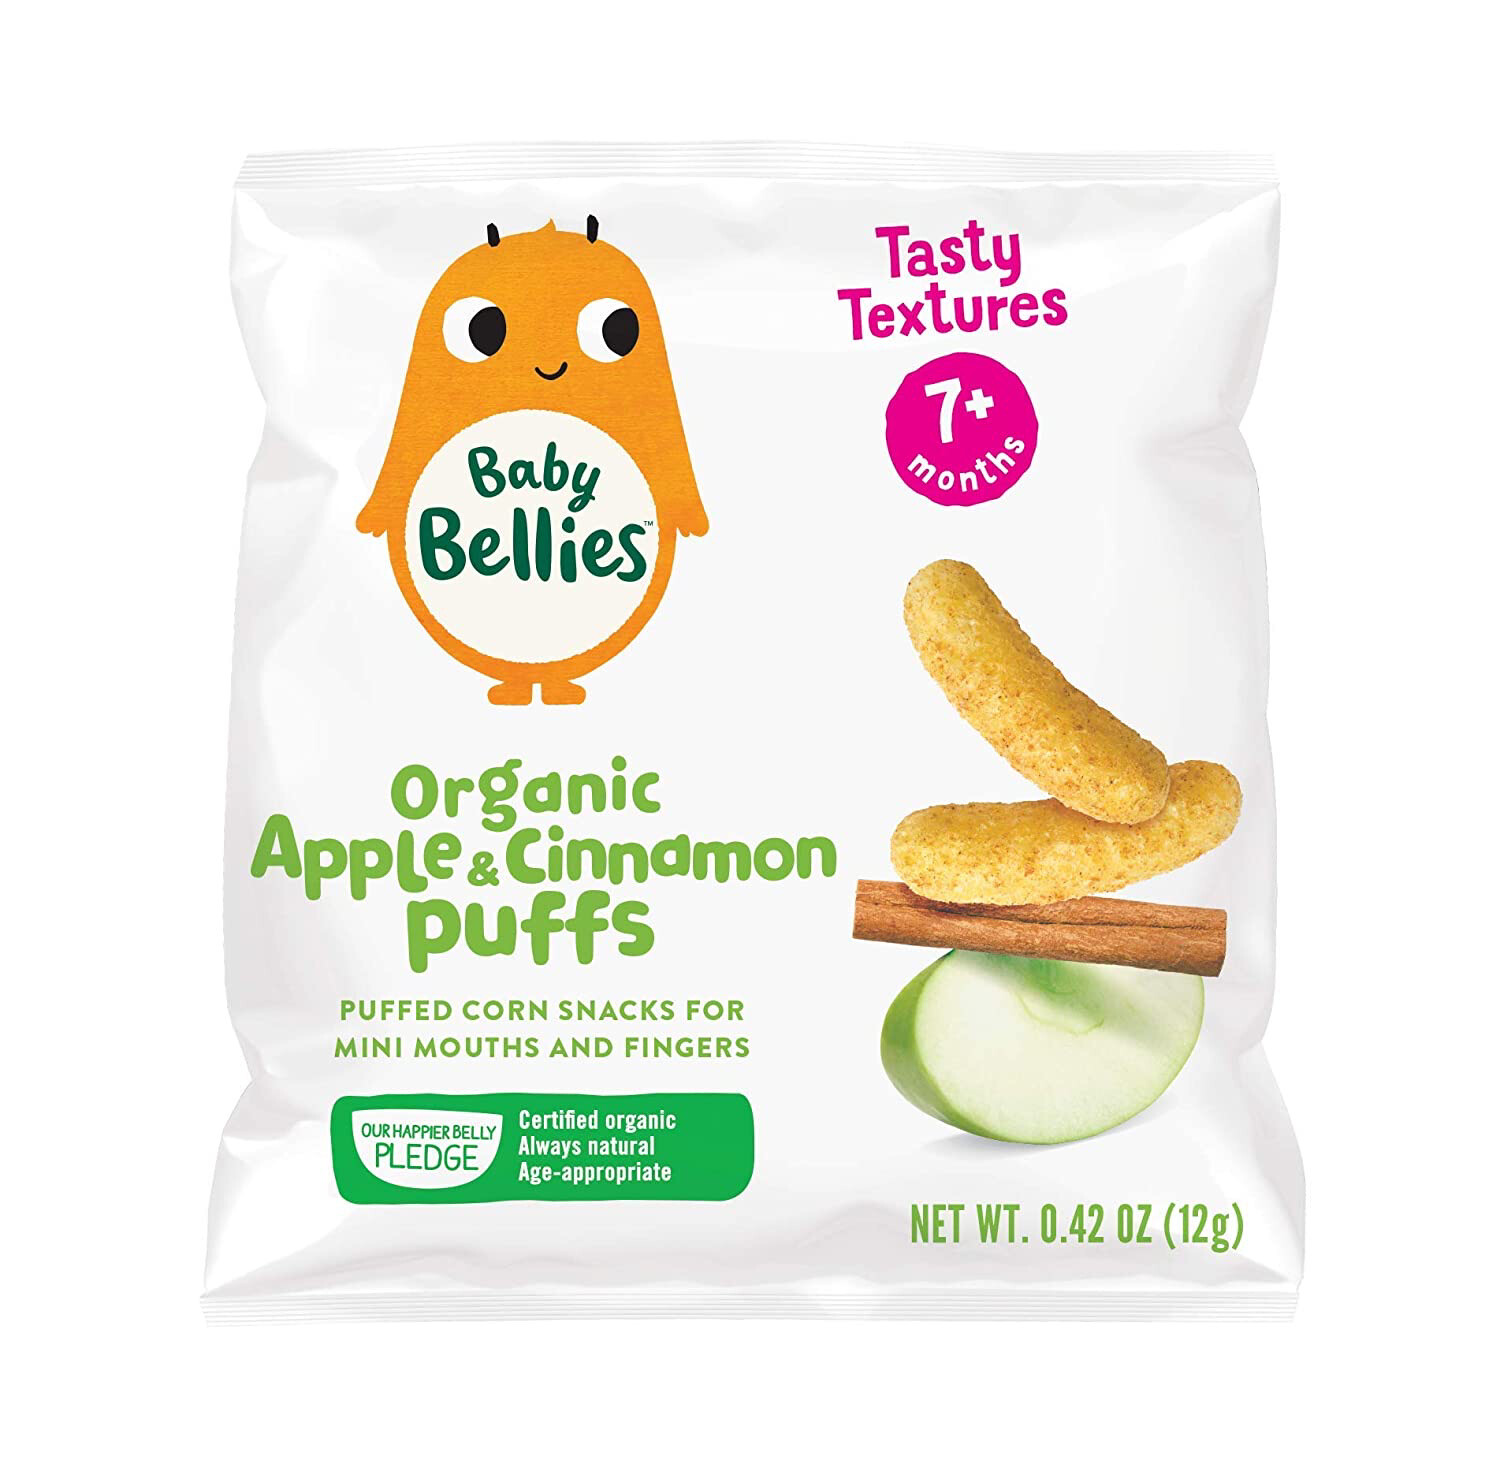 Baby Bellies Organic Apple & Cinnamon Puffed Corn Snacks for Fearless Fingers